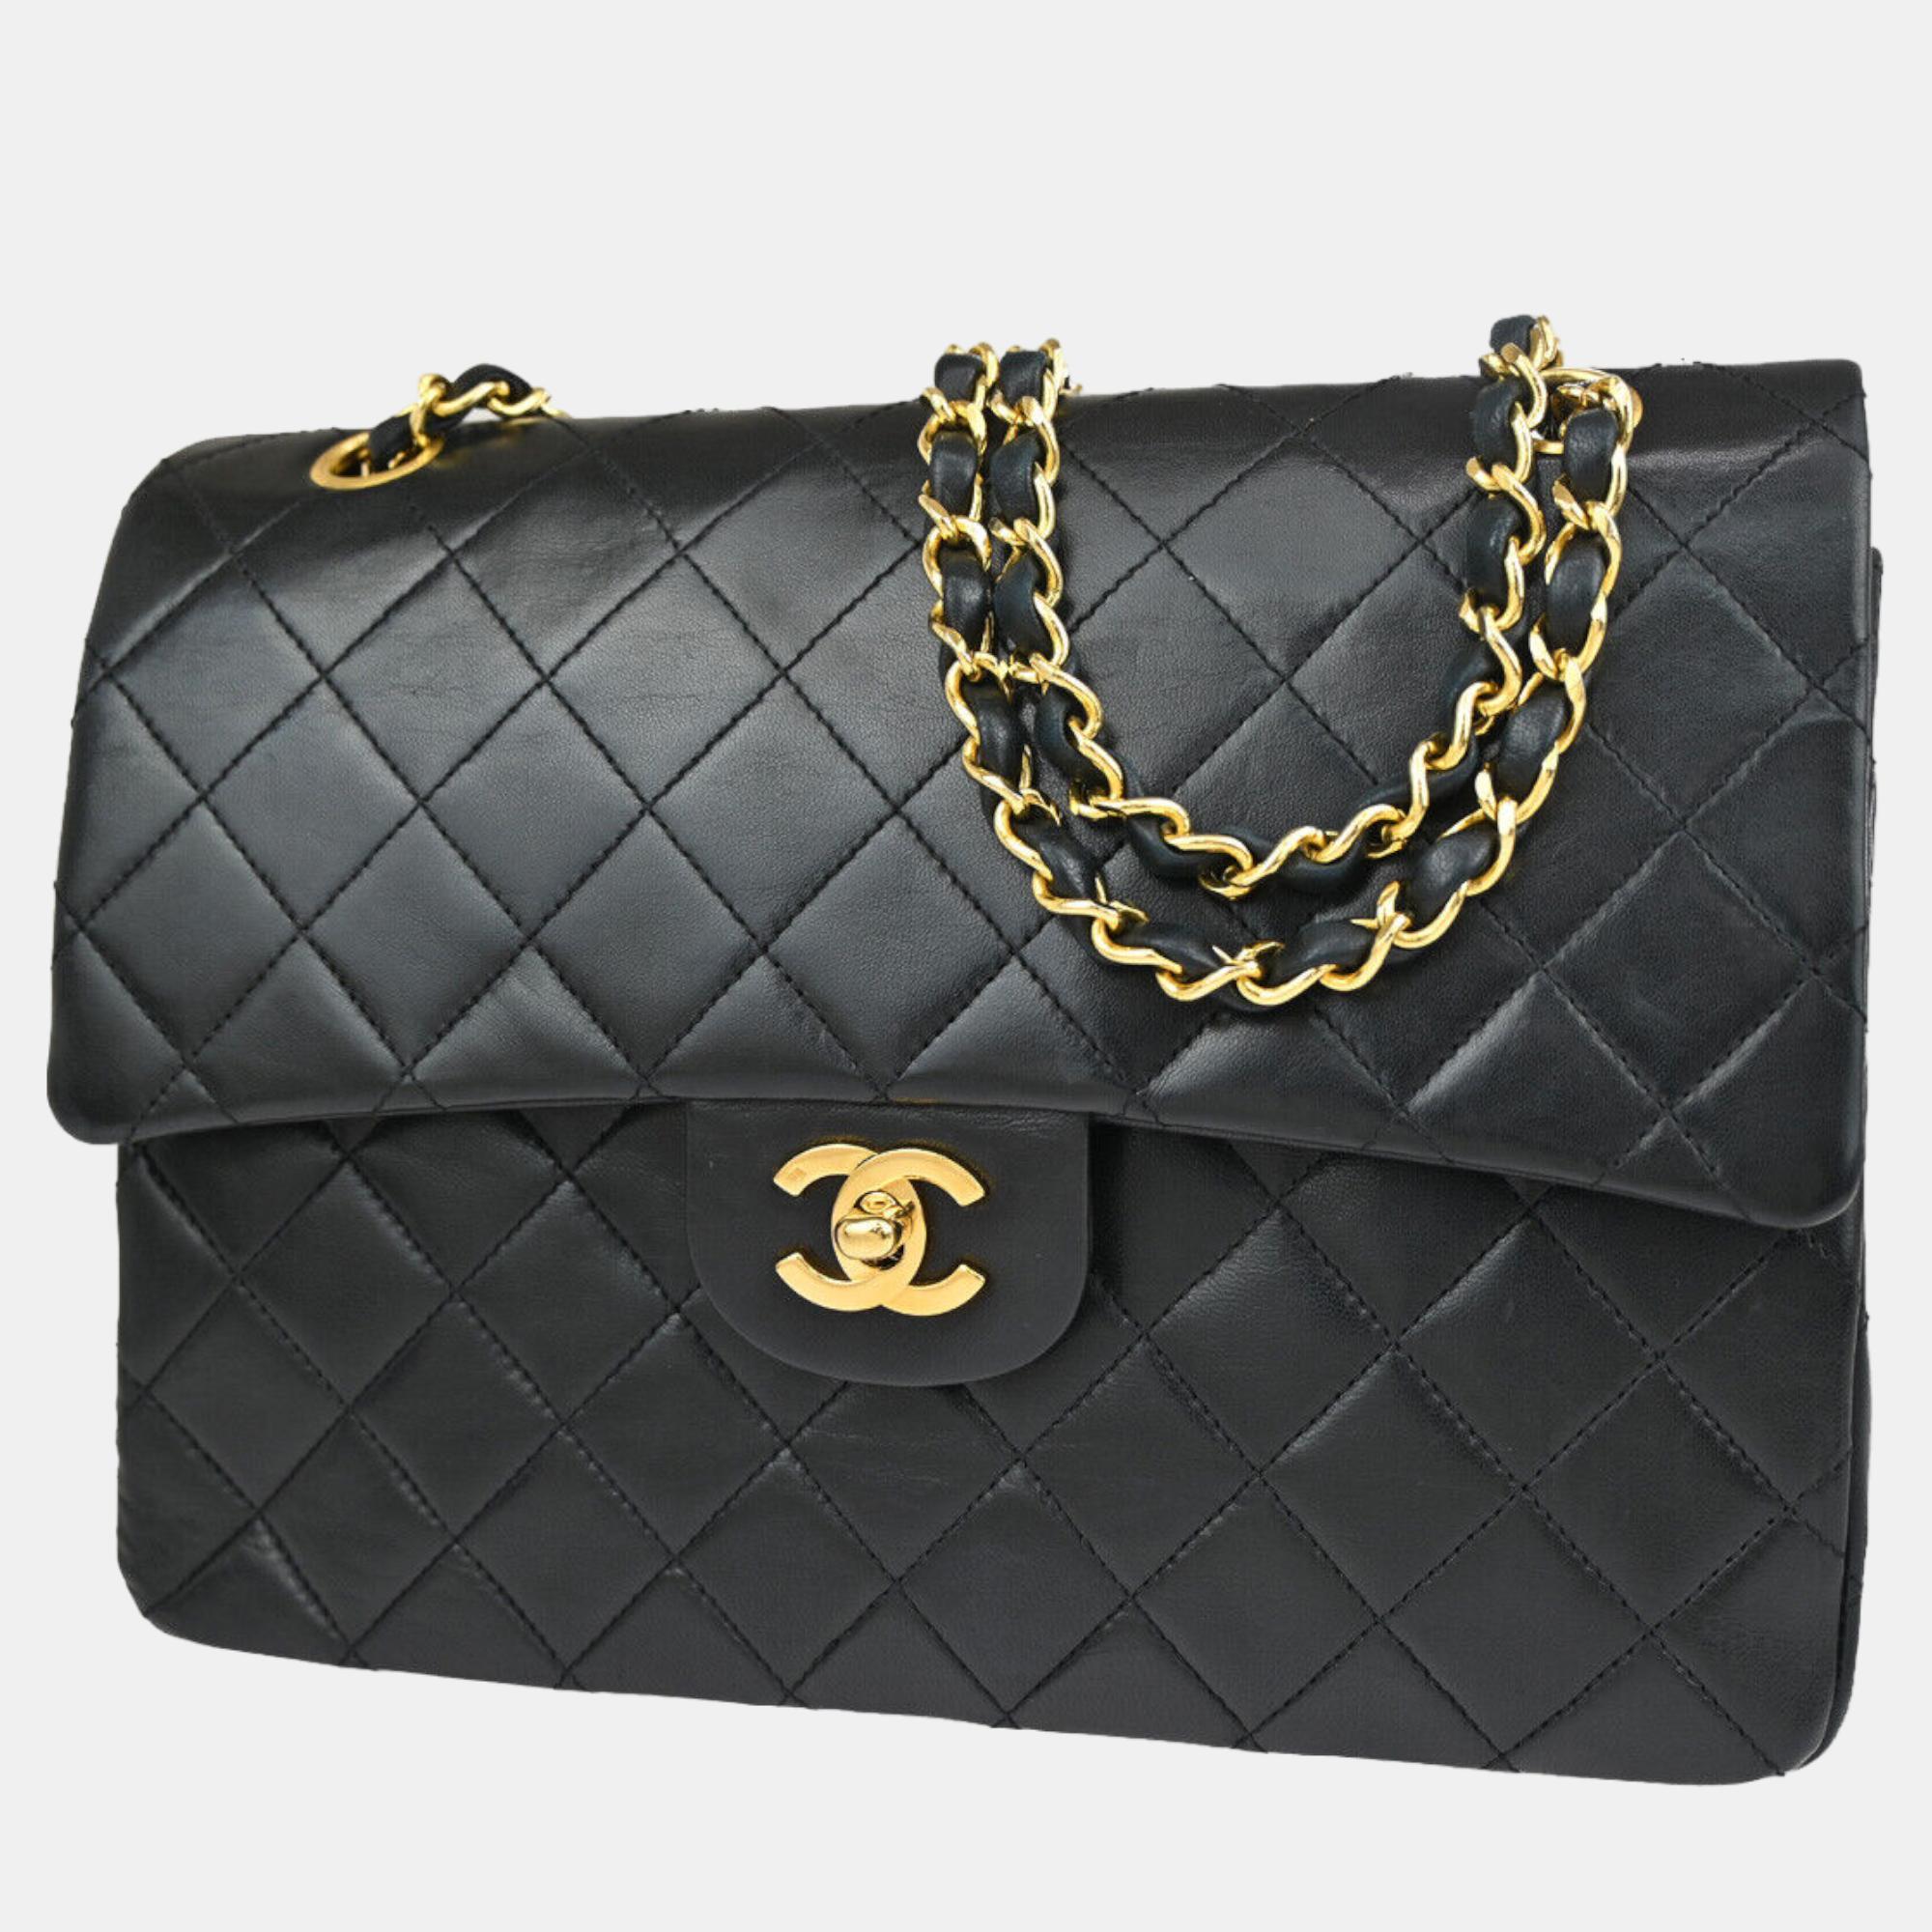 Chanel black lambskin leather  classic single flap shoulder bags